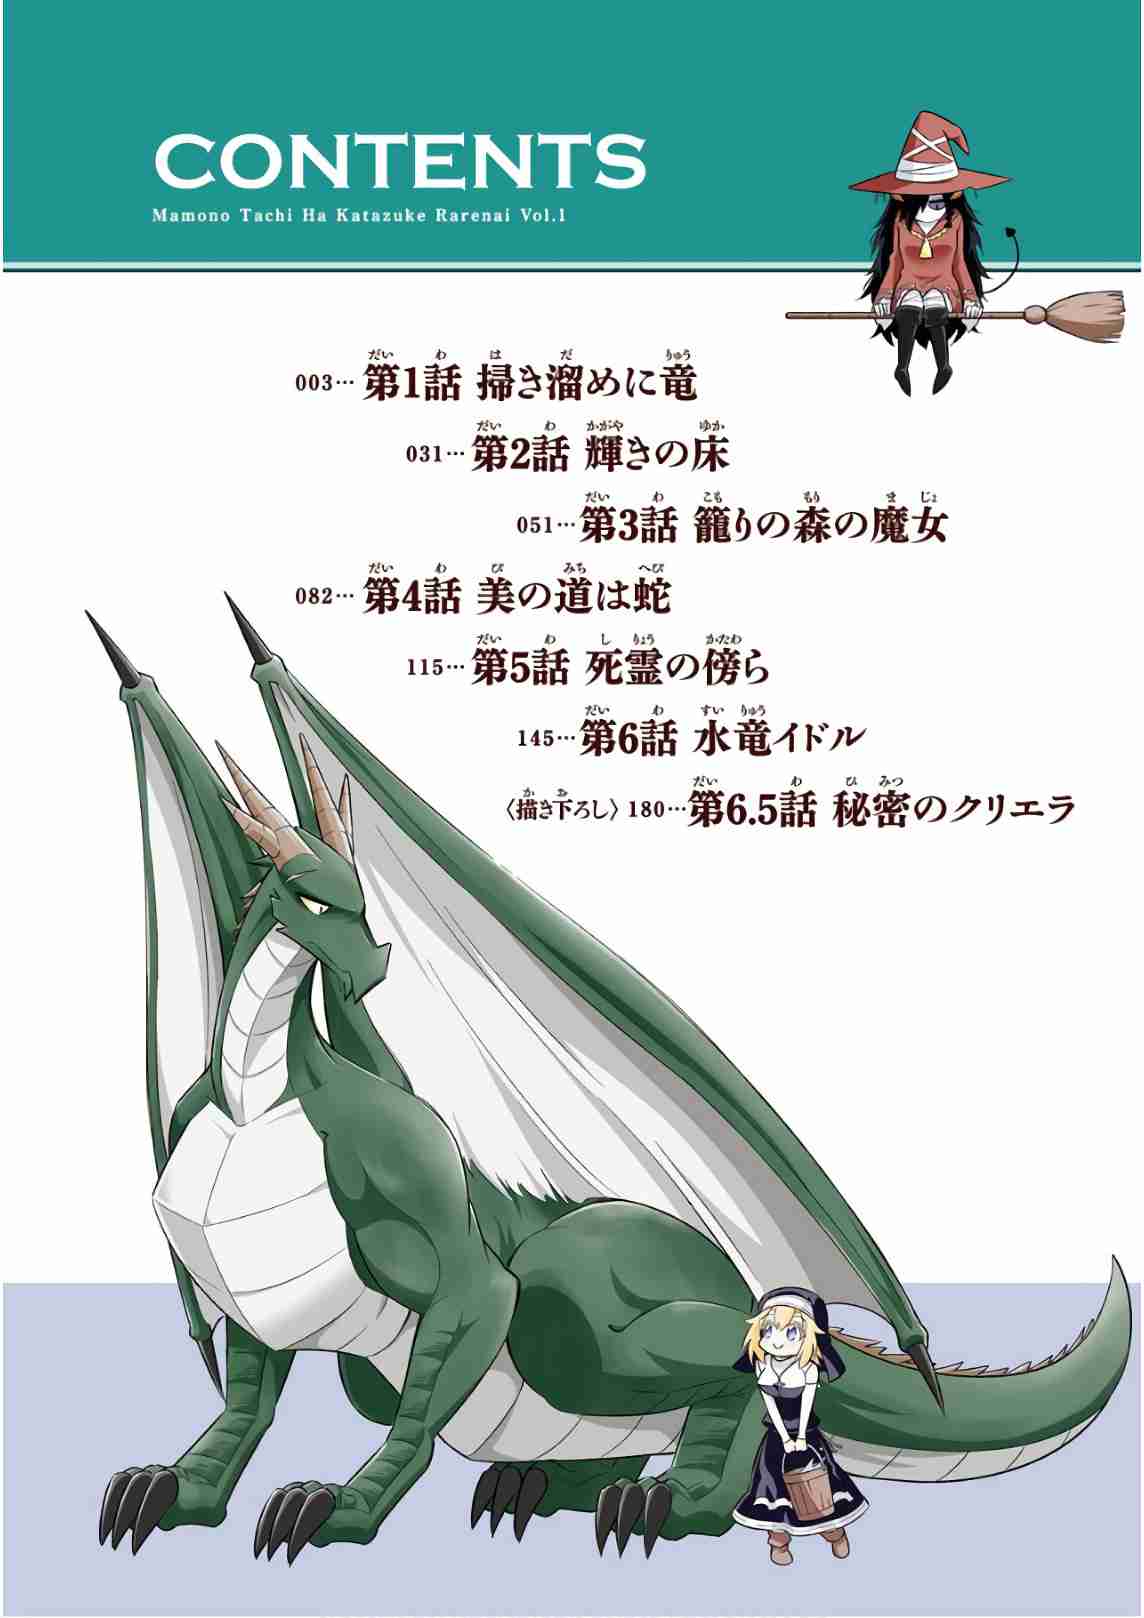 Mamono tachi Wa Katazuke Rarenai Vol. 1 Ch. 1 The dragon in the rubbish heap